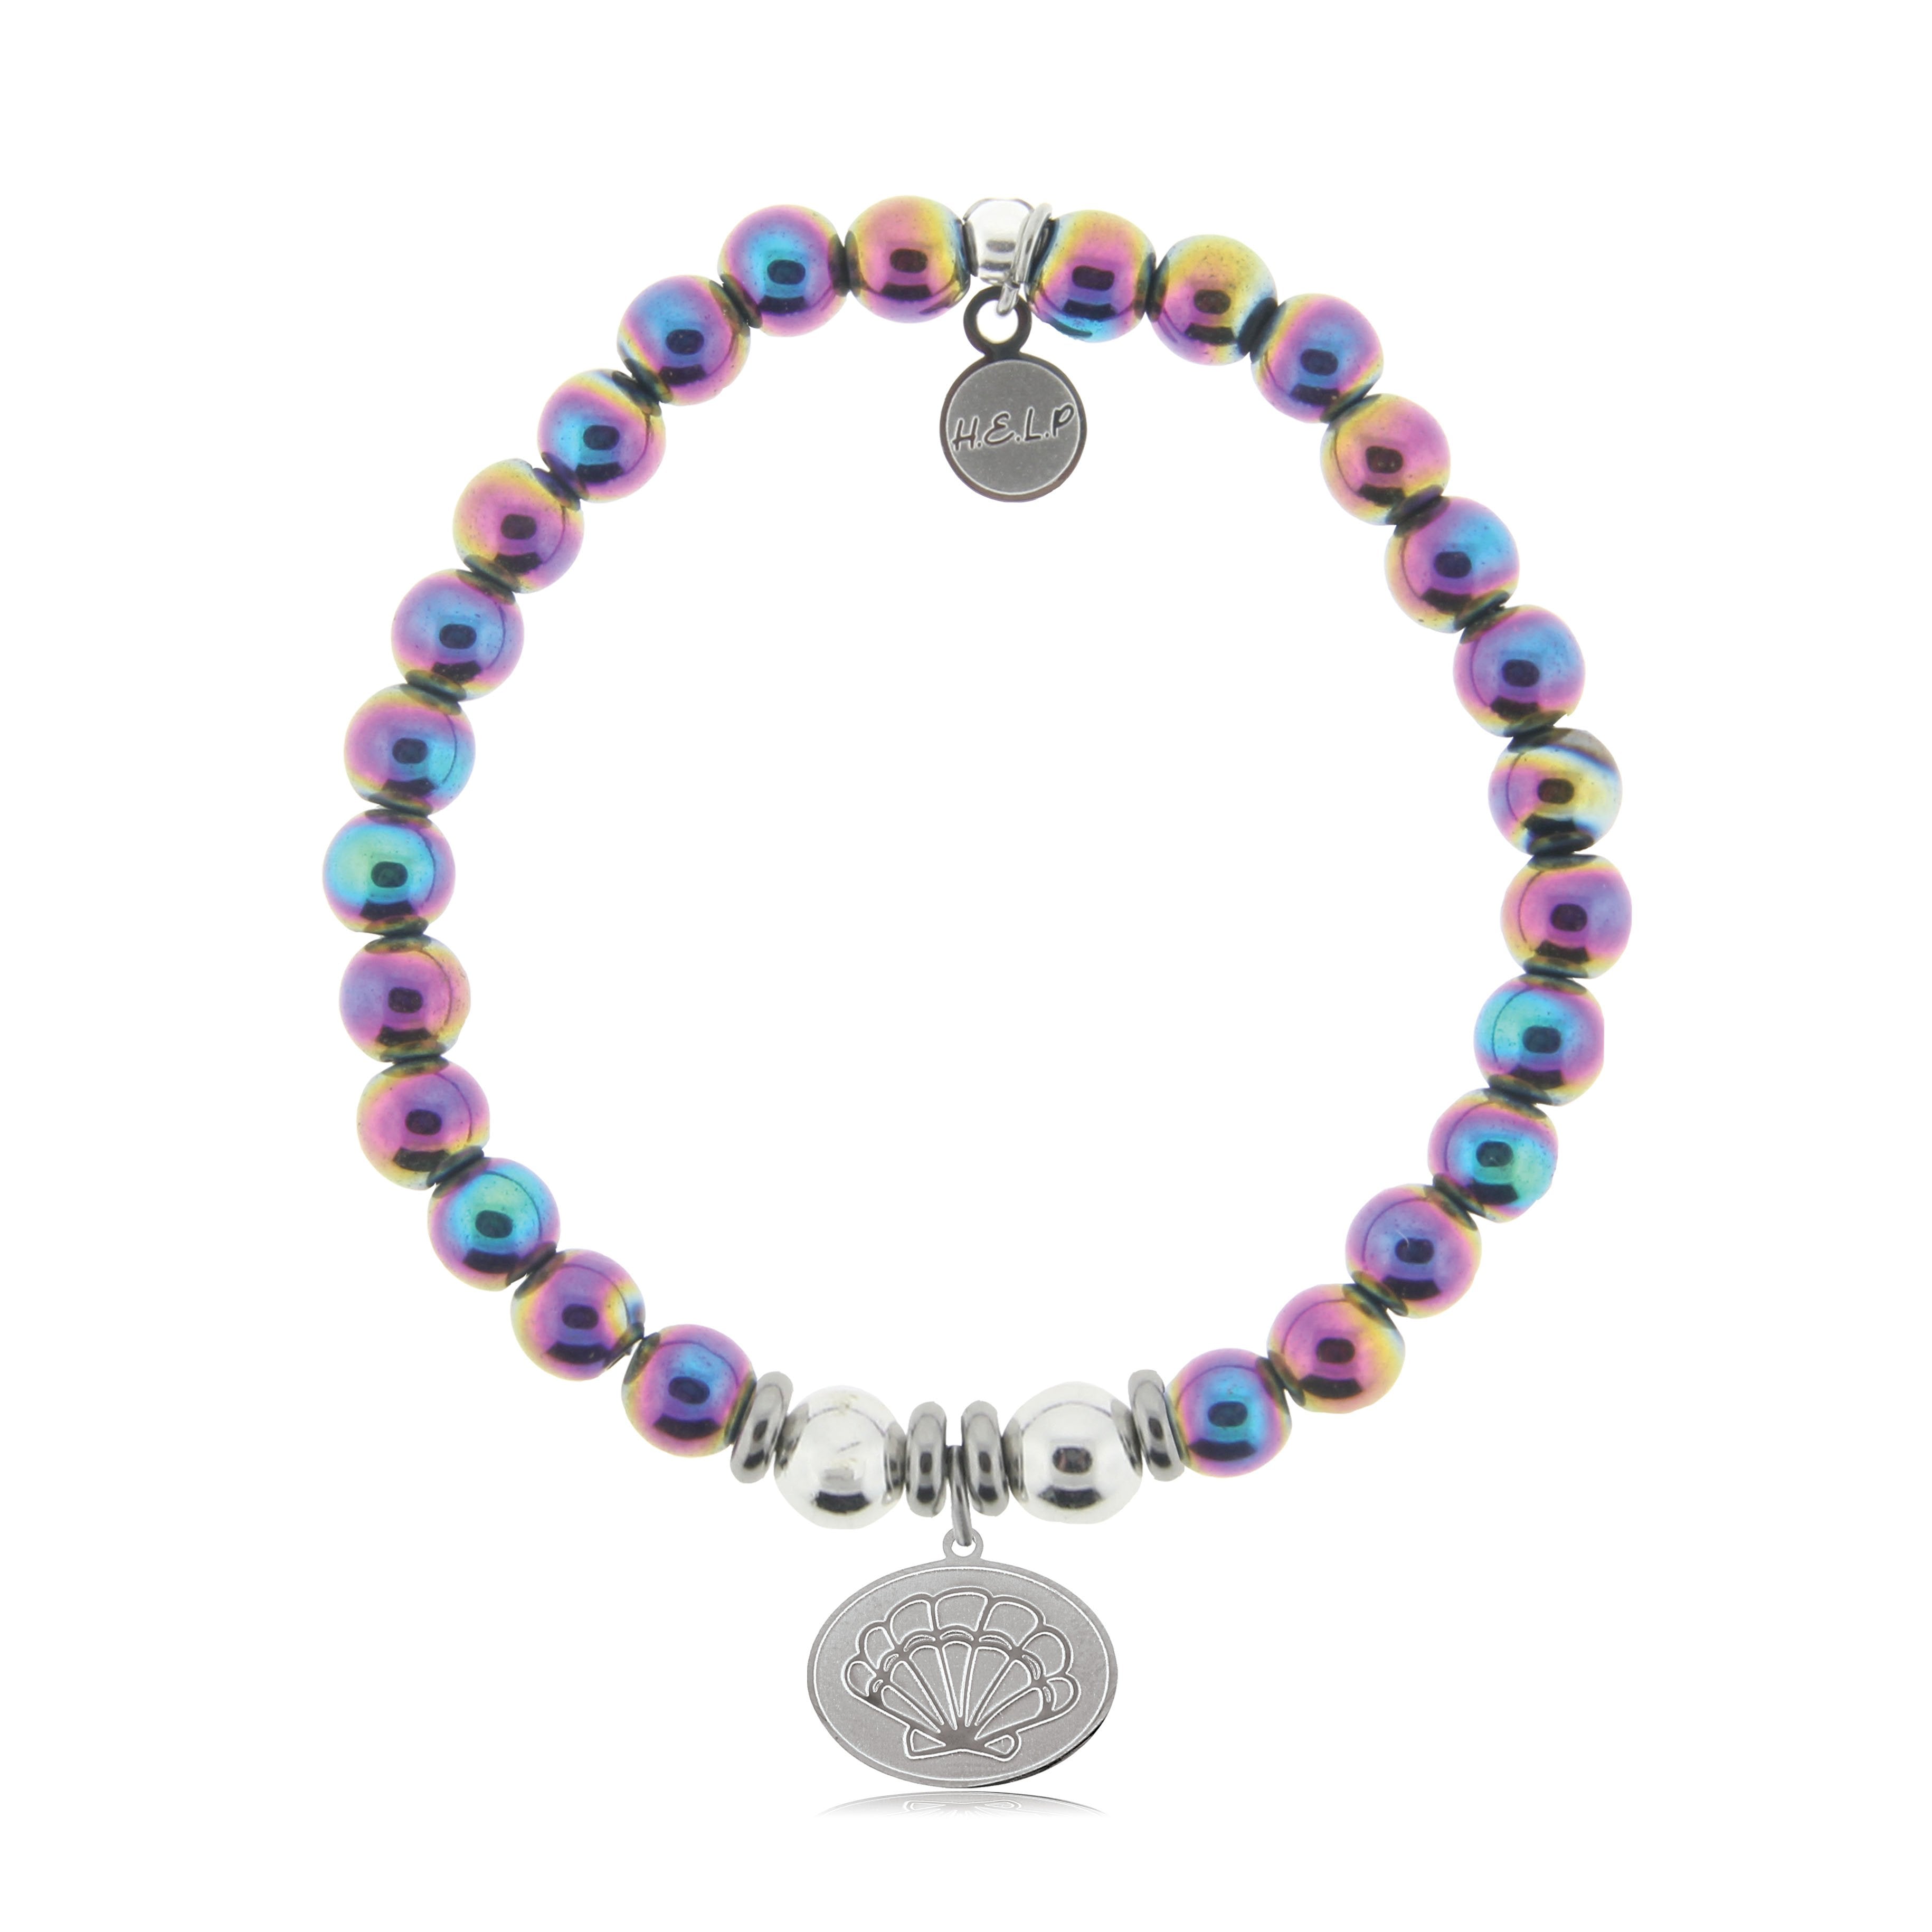 HELP by TJ Seashell Charm with Rainbow Hematite Beads Charity Bracelet